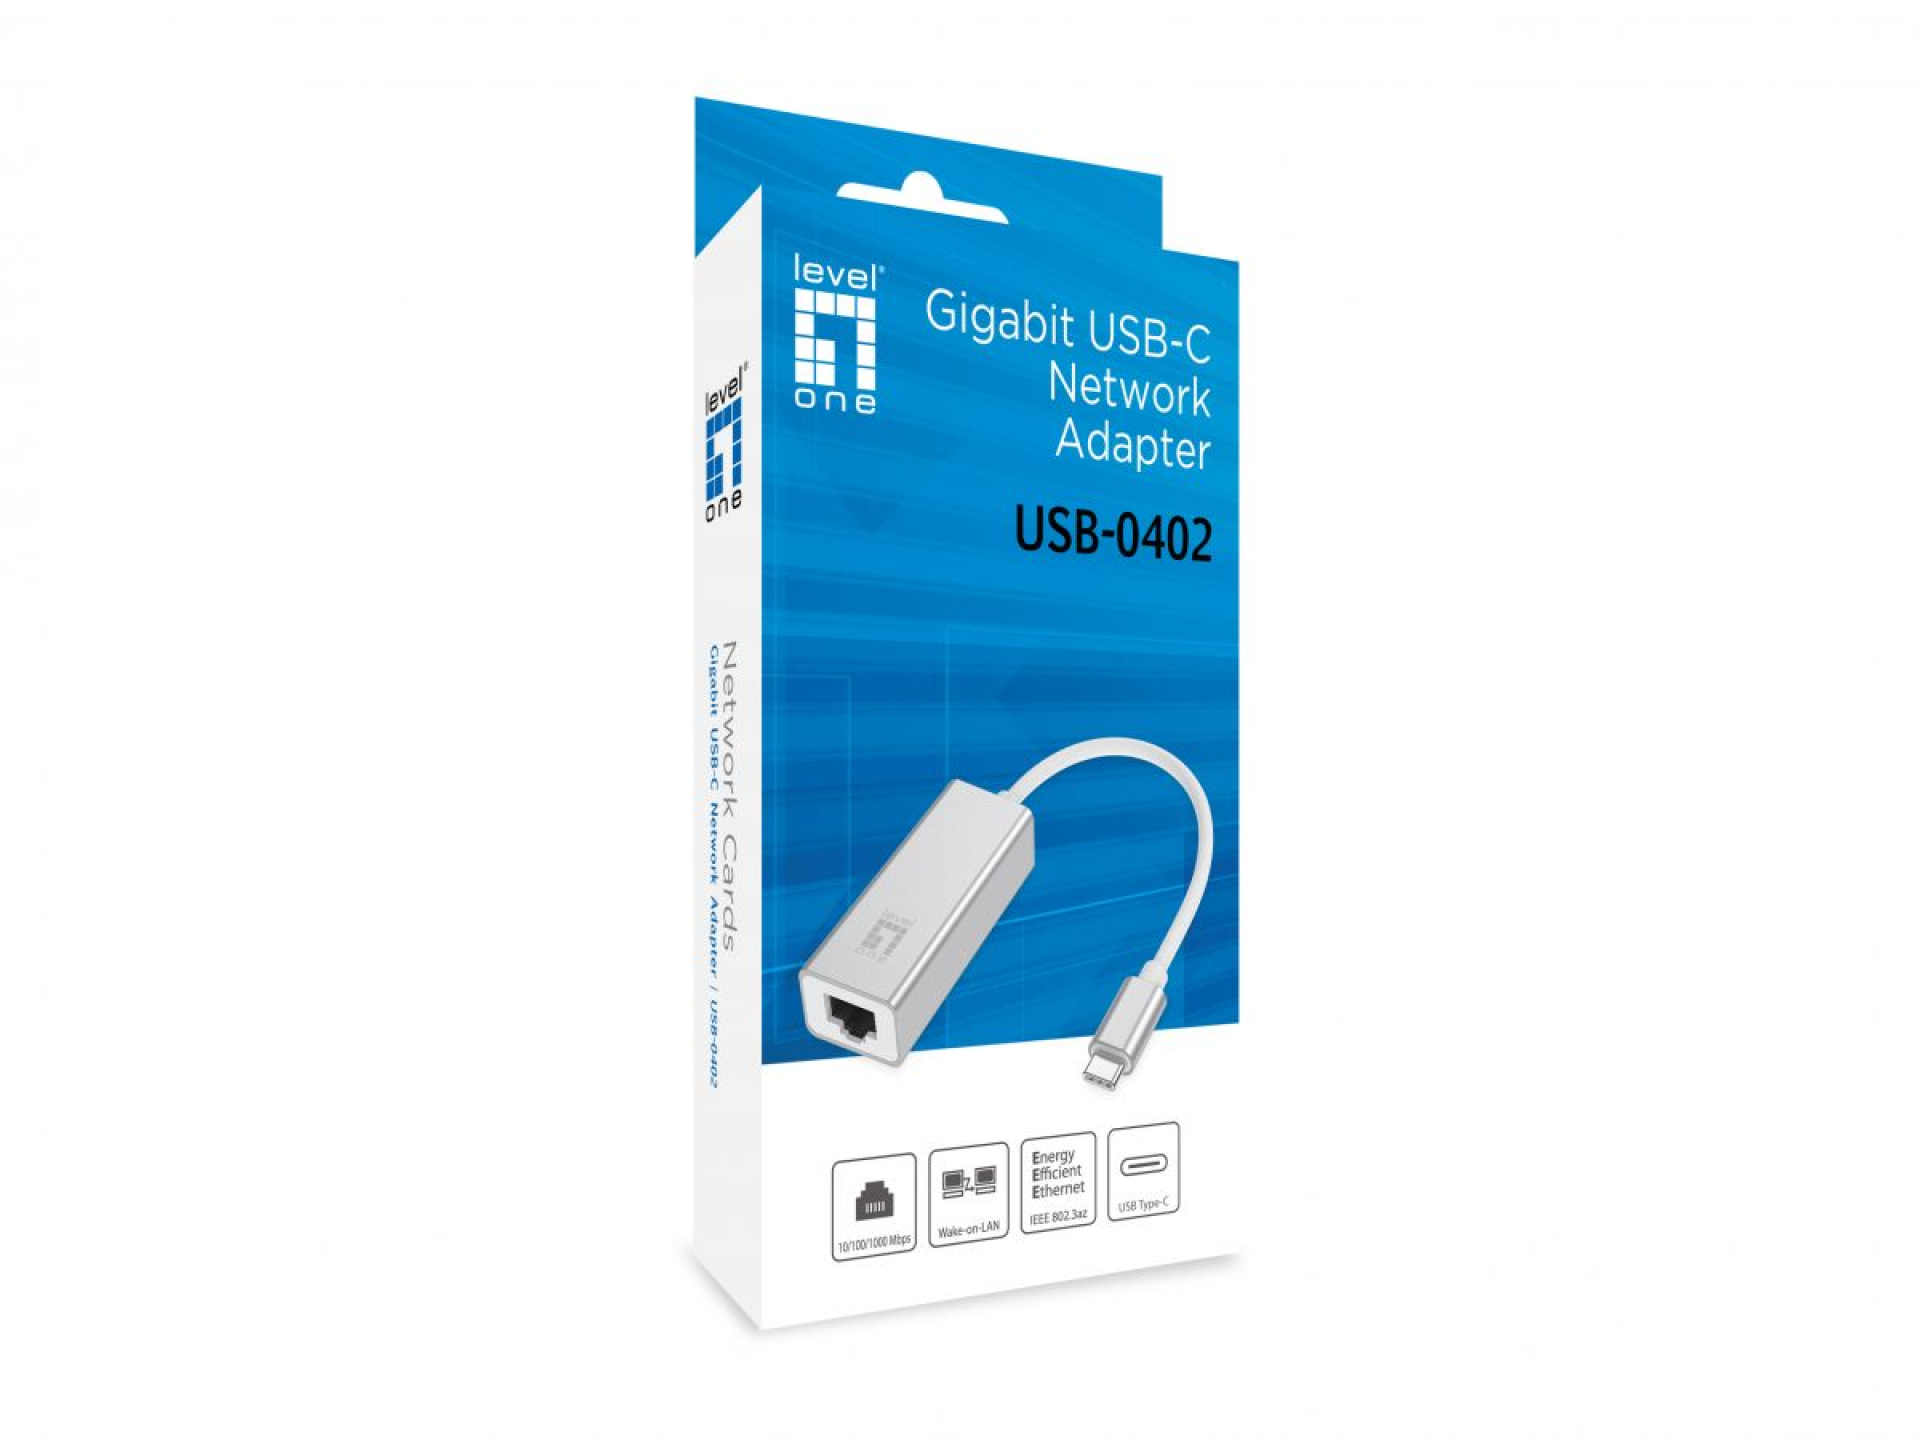 Gigabit USB-C network adapter